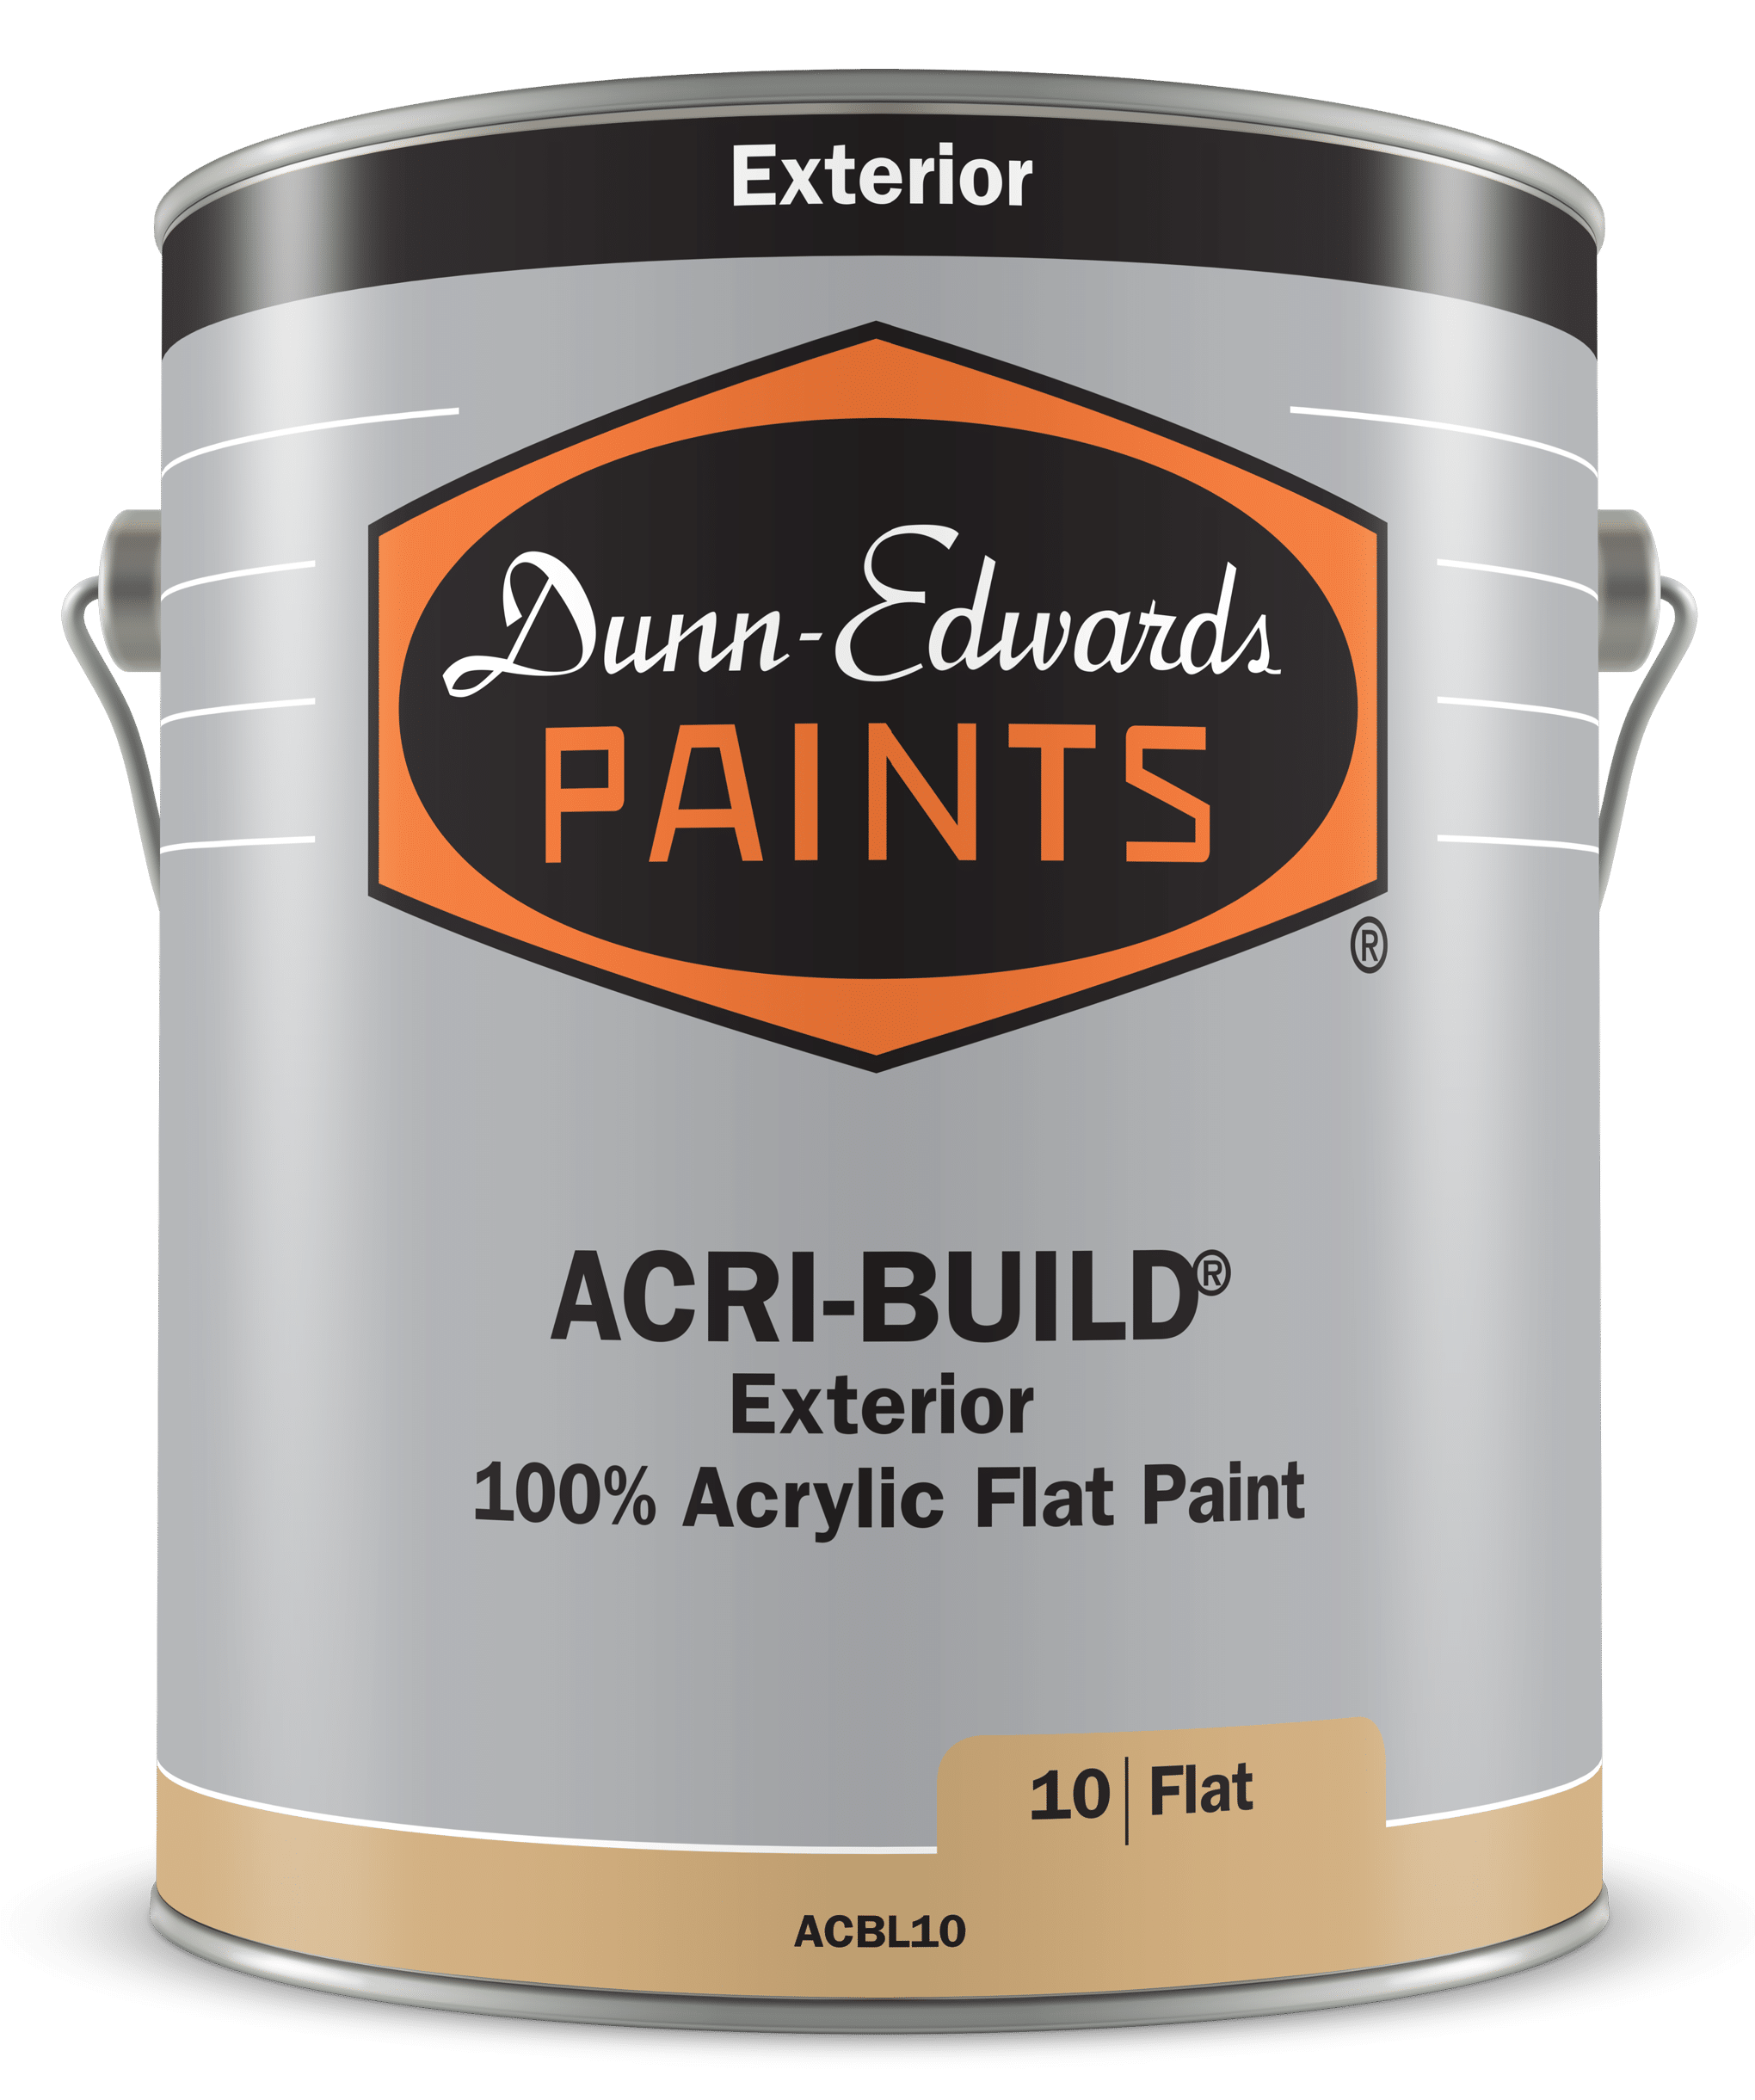 ACRI-BUILD Exterior 100% Acrylic Flat Paint Can